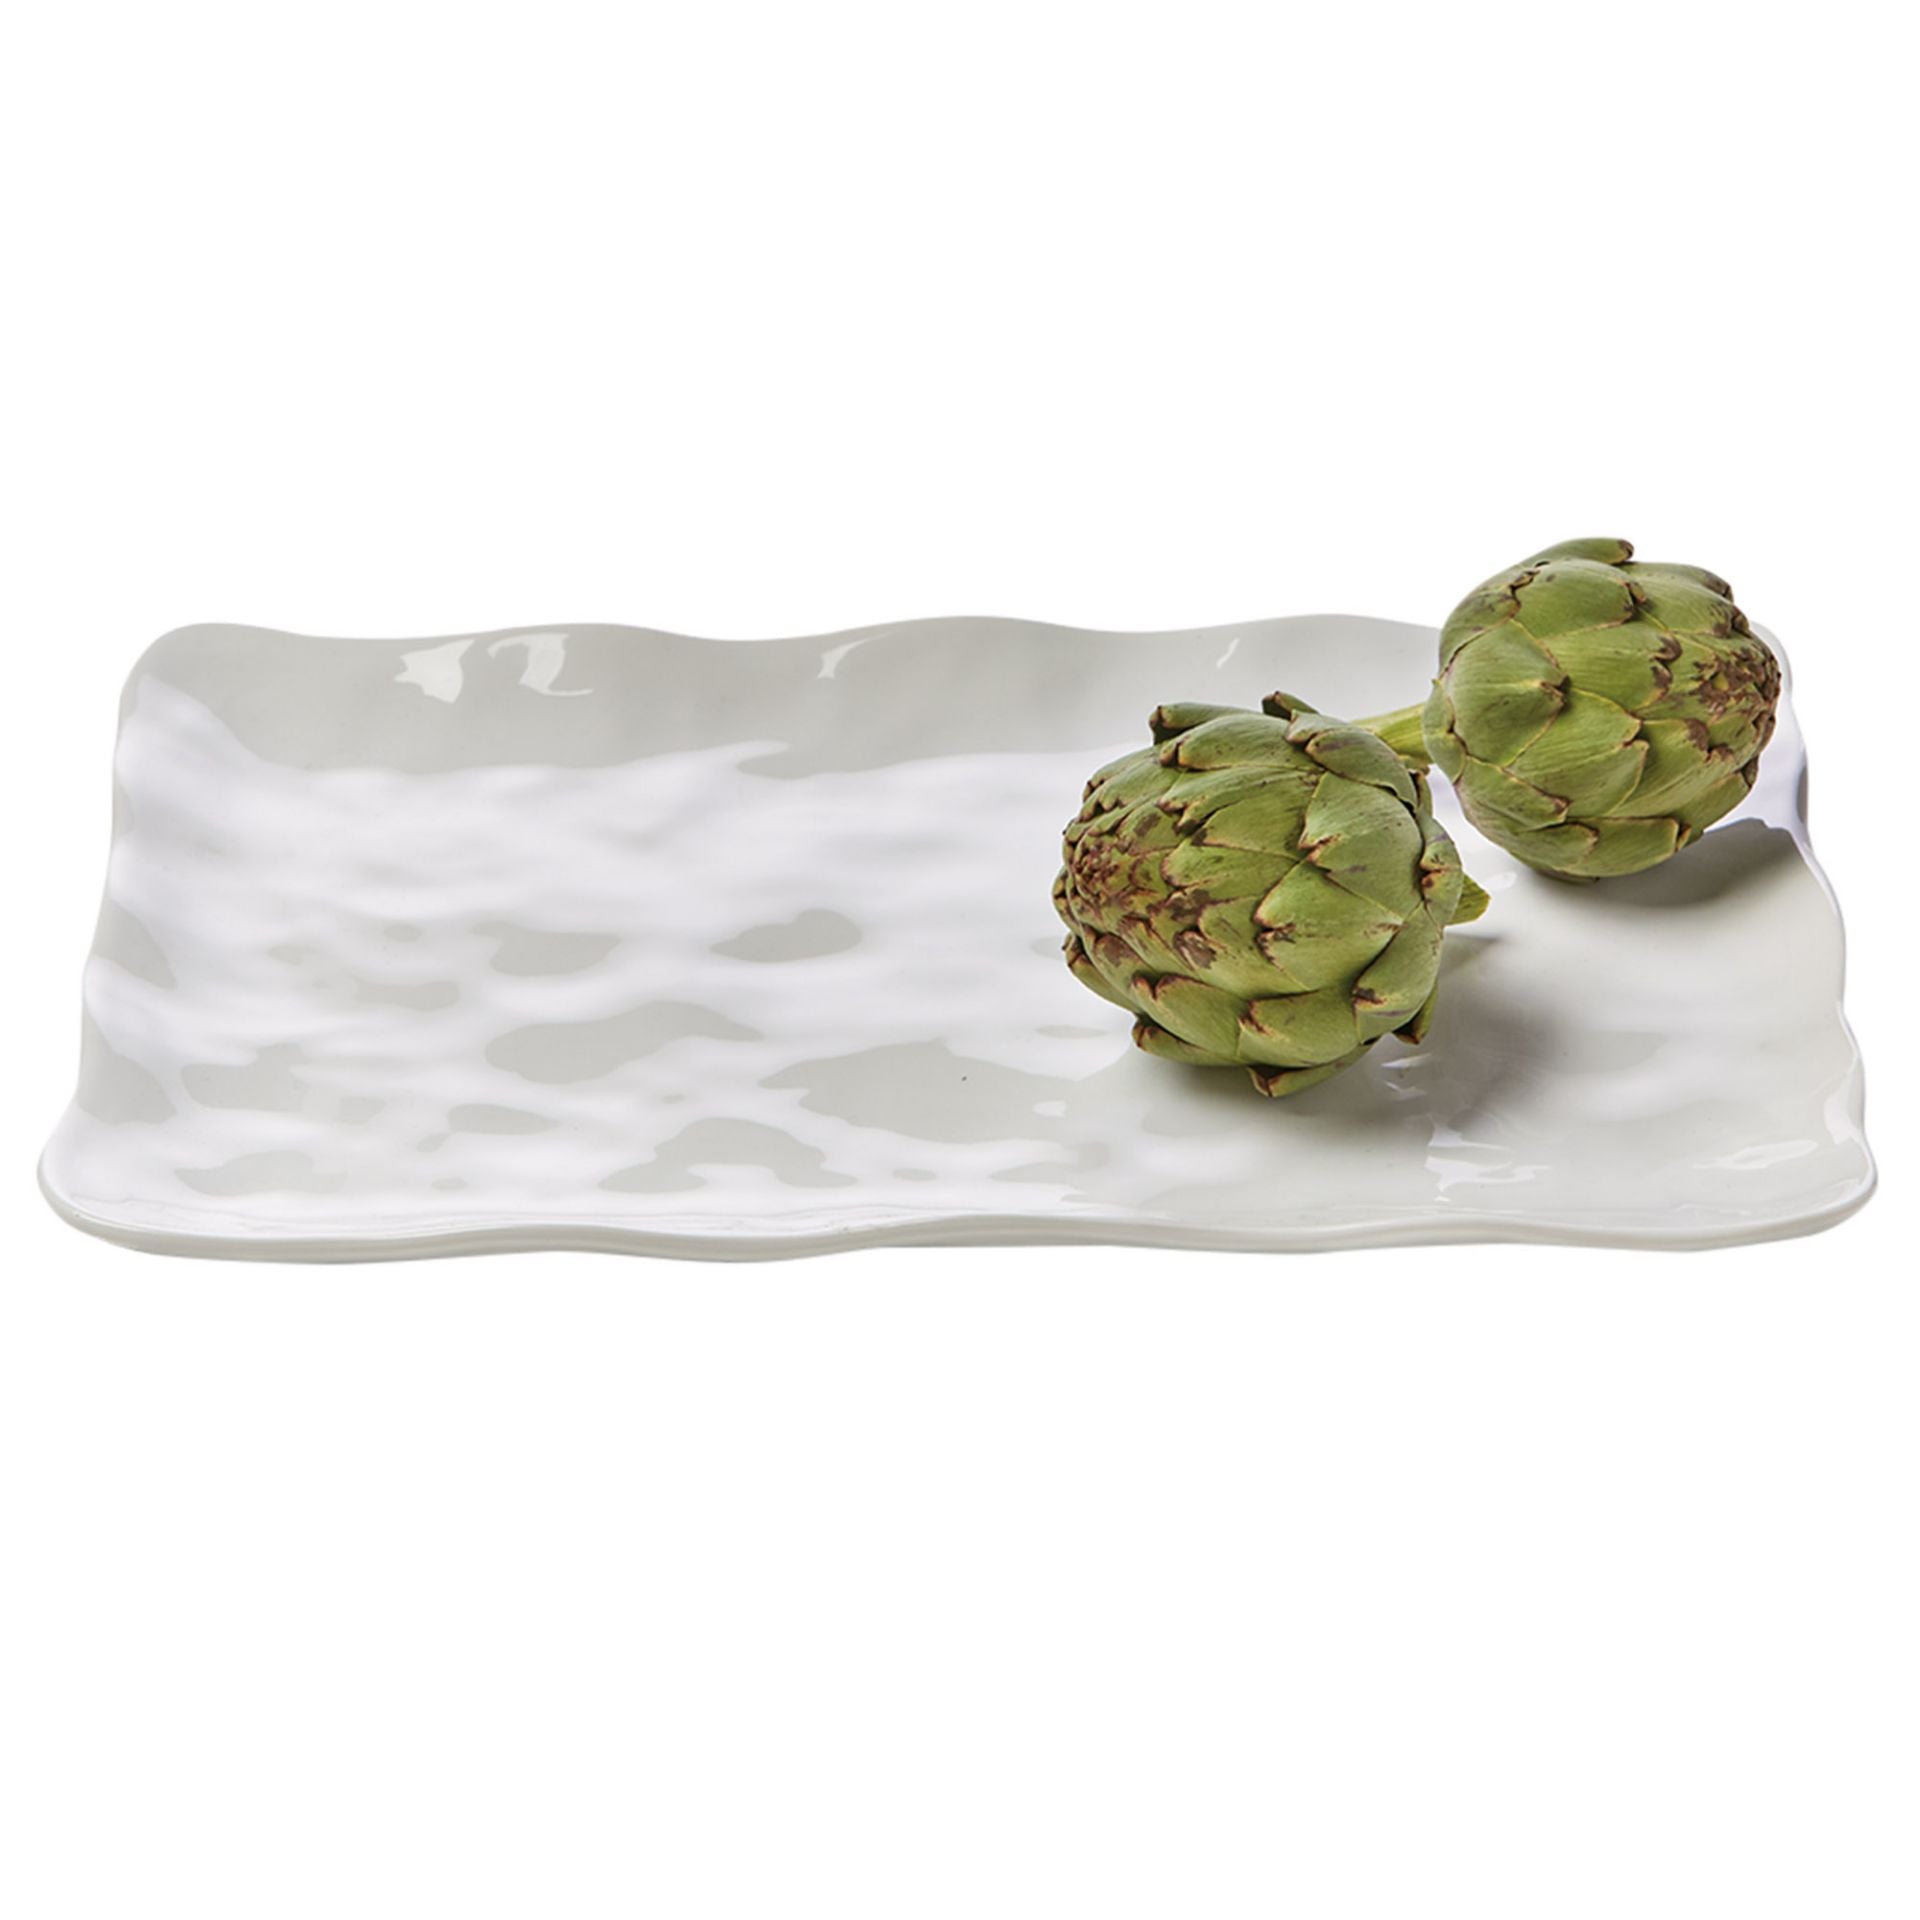 Formosa rectanguar platter - white